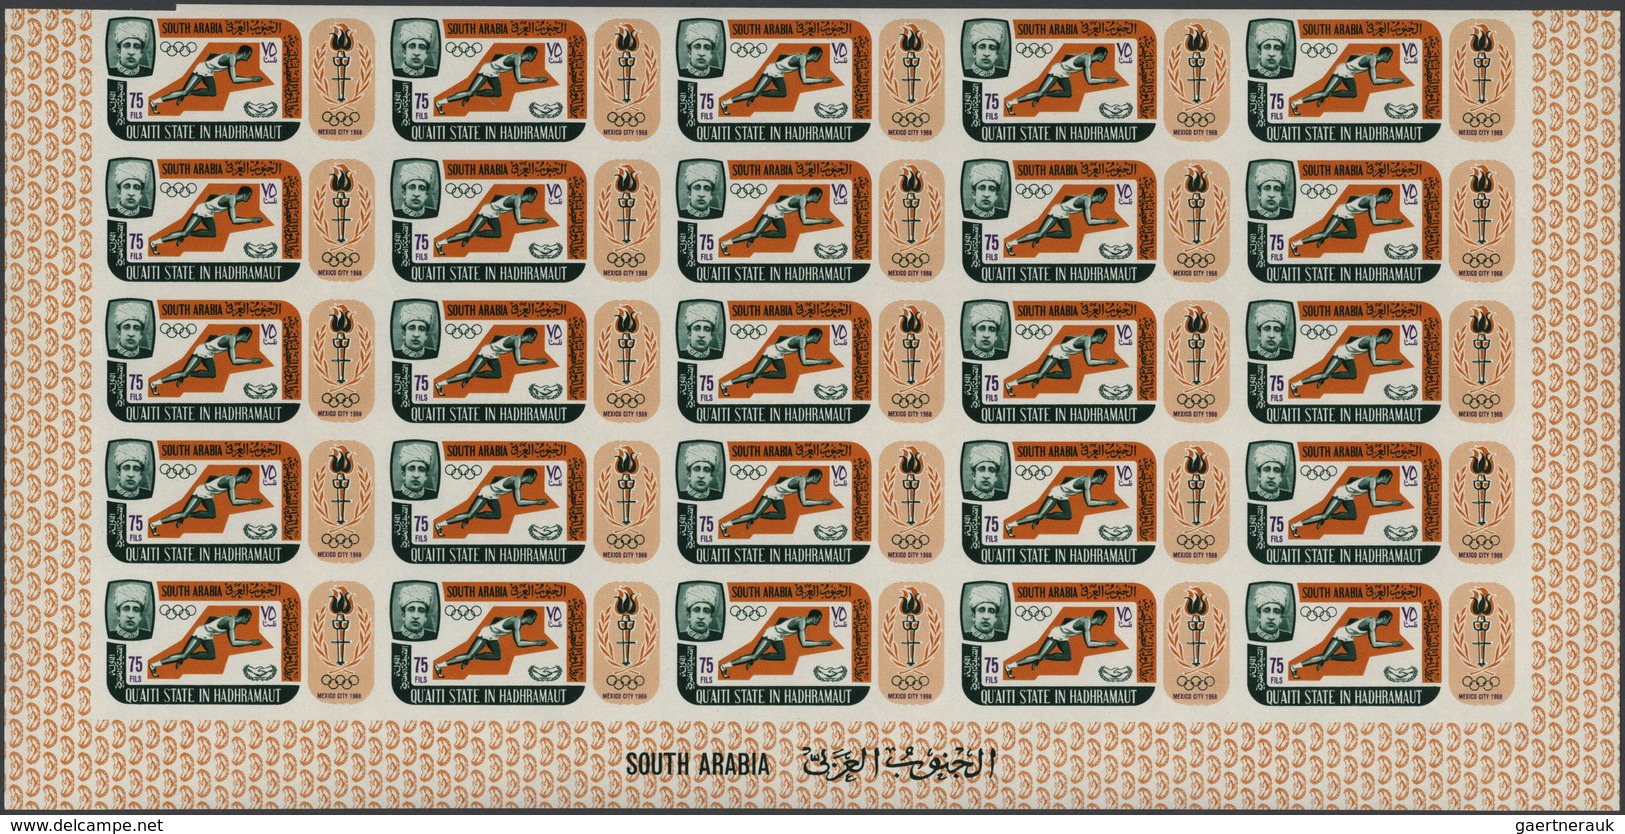 Aden - Kathiri State of Seiyun: 1967/1968, Seiyun/Hadhramaut/Mahra, u/m assortment of complete sheet